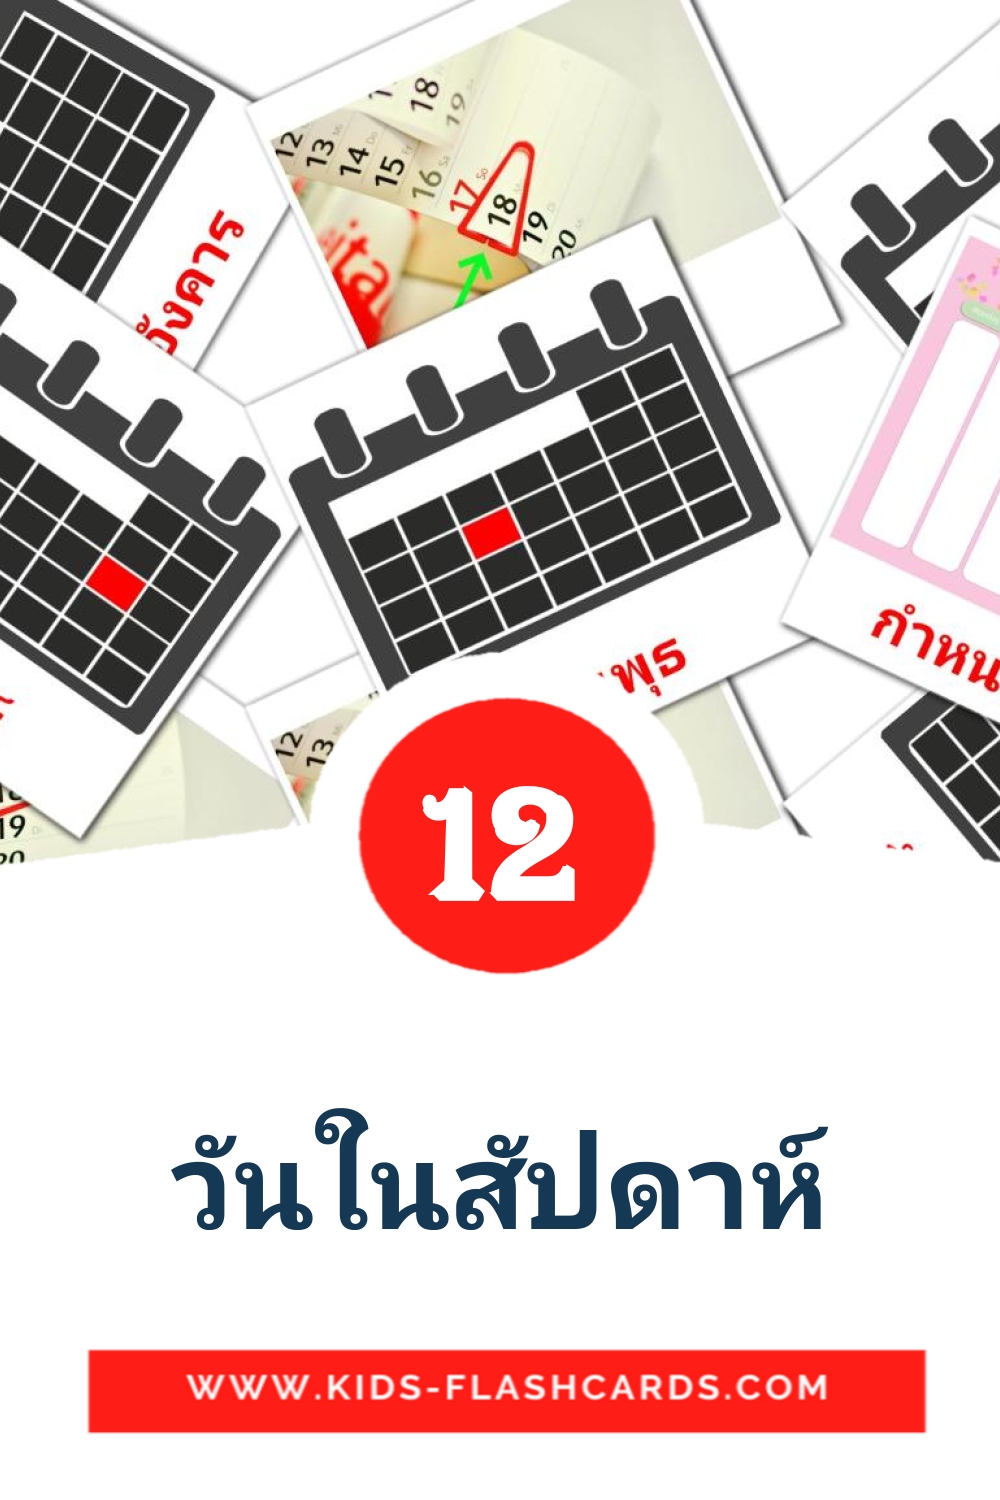 12 carte illustrate di วันในสัปดาห์ per la scuola materna in tailandese